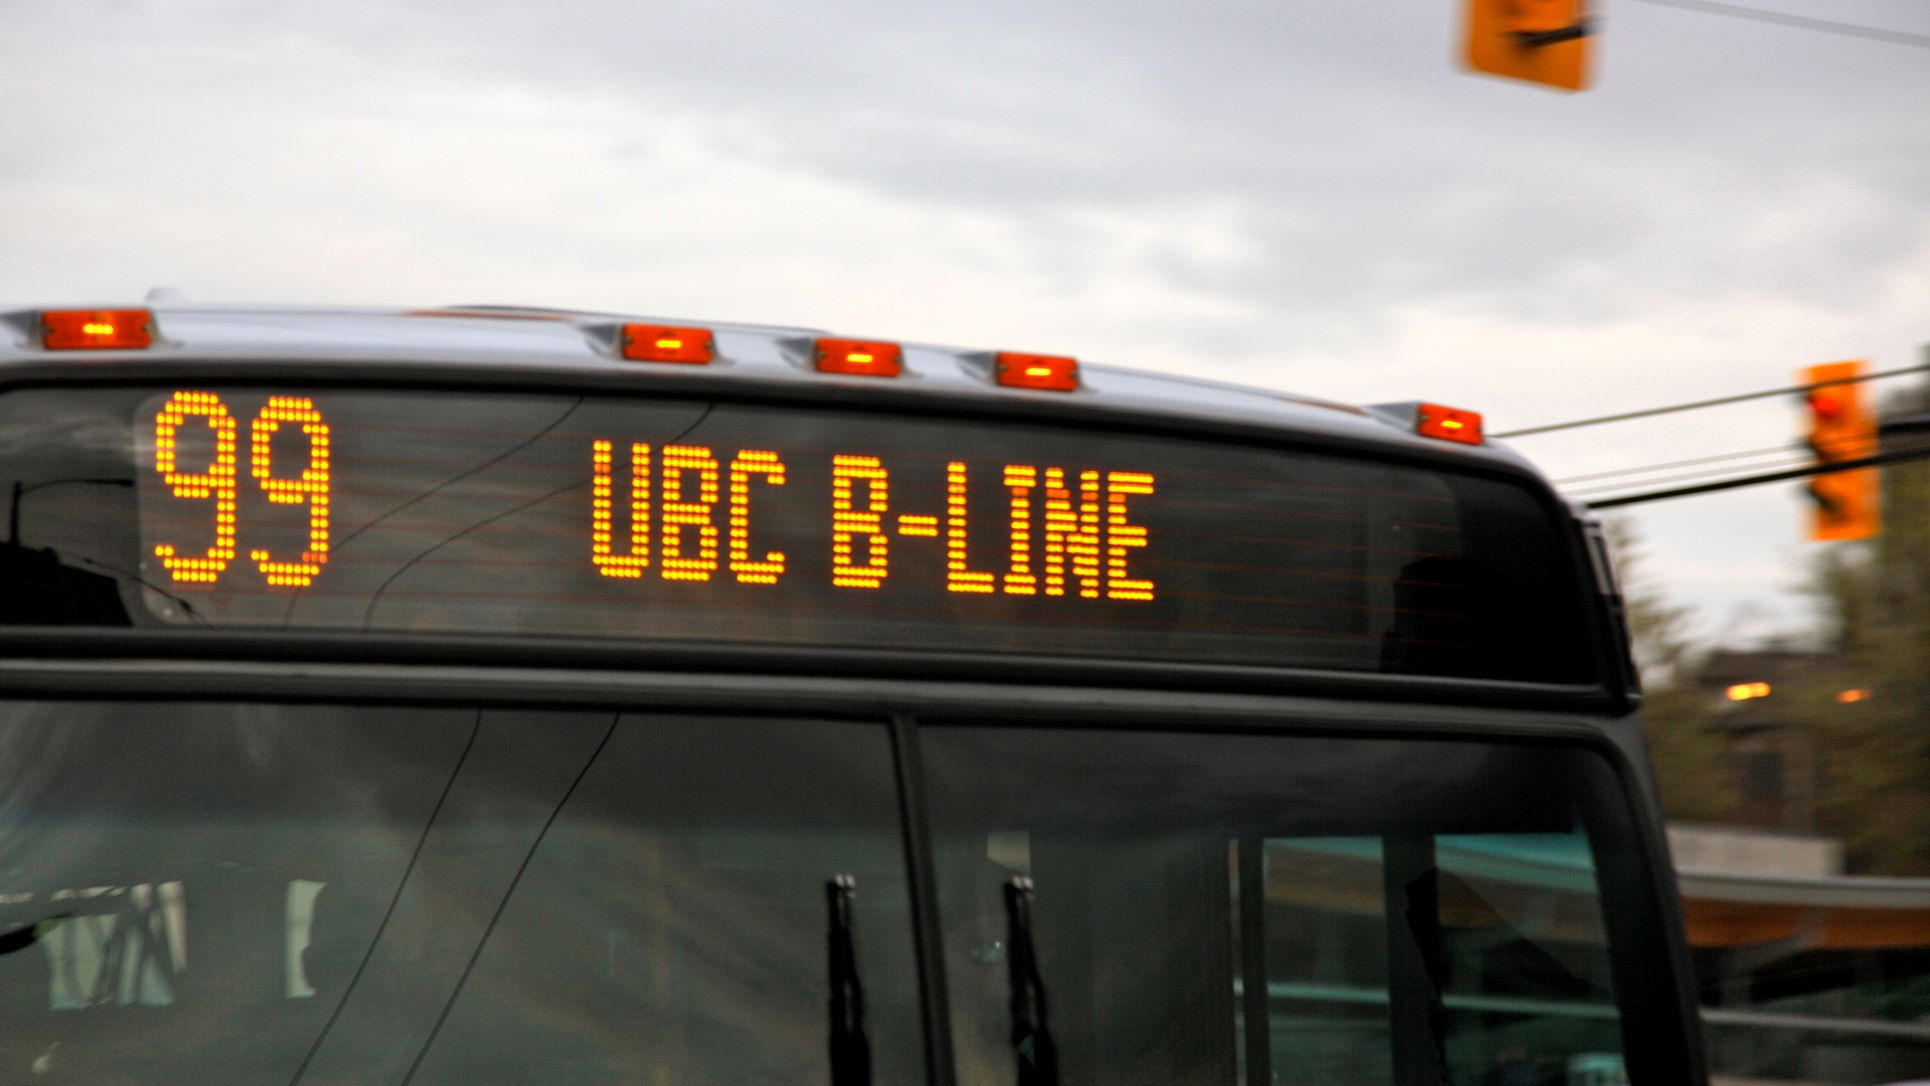 99 UBC B-Line destination sign